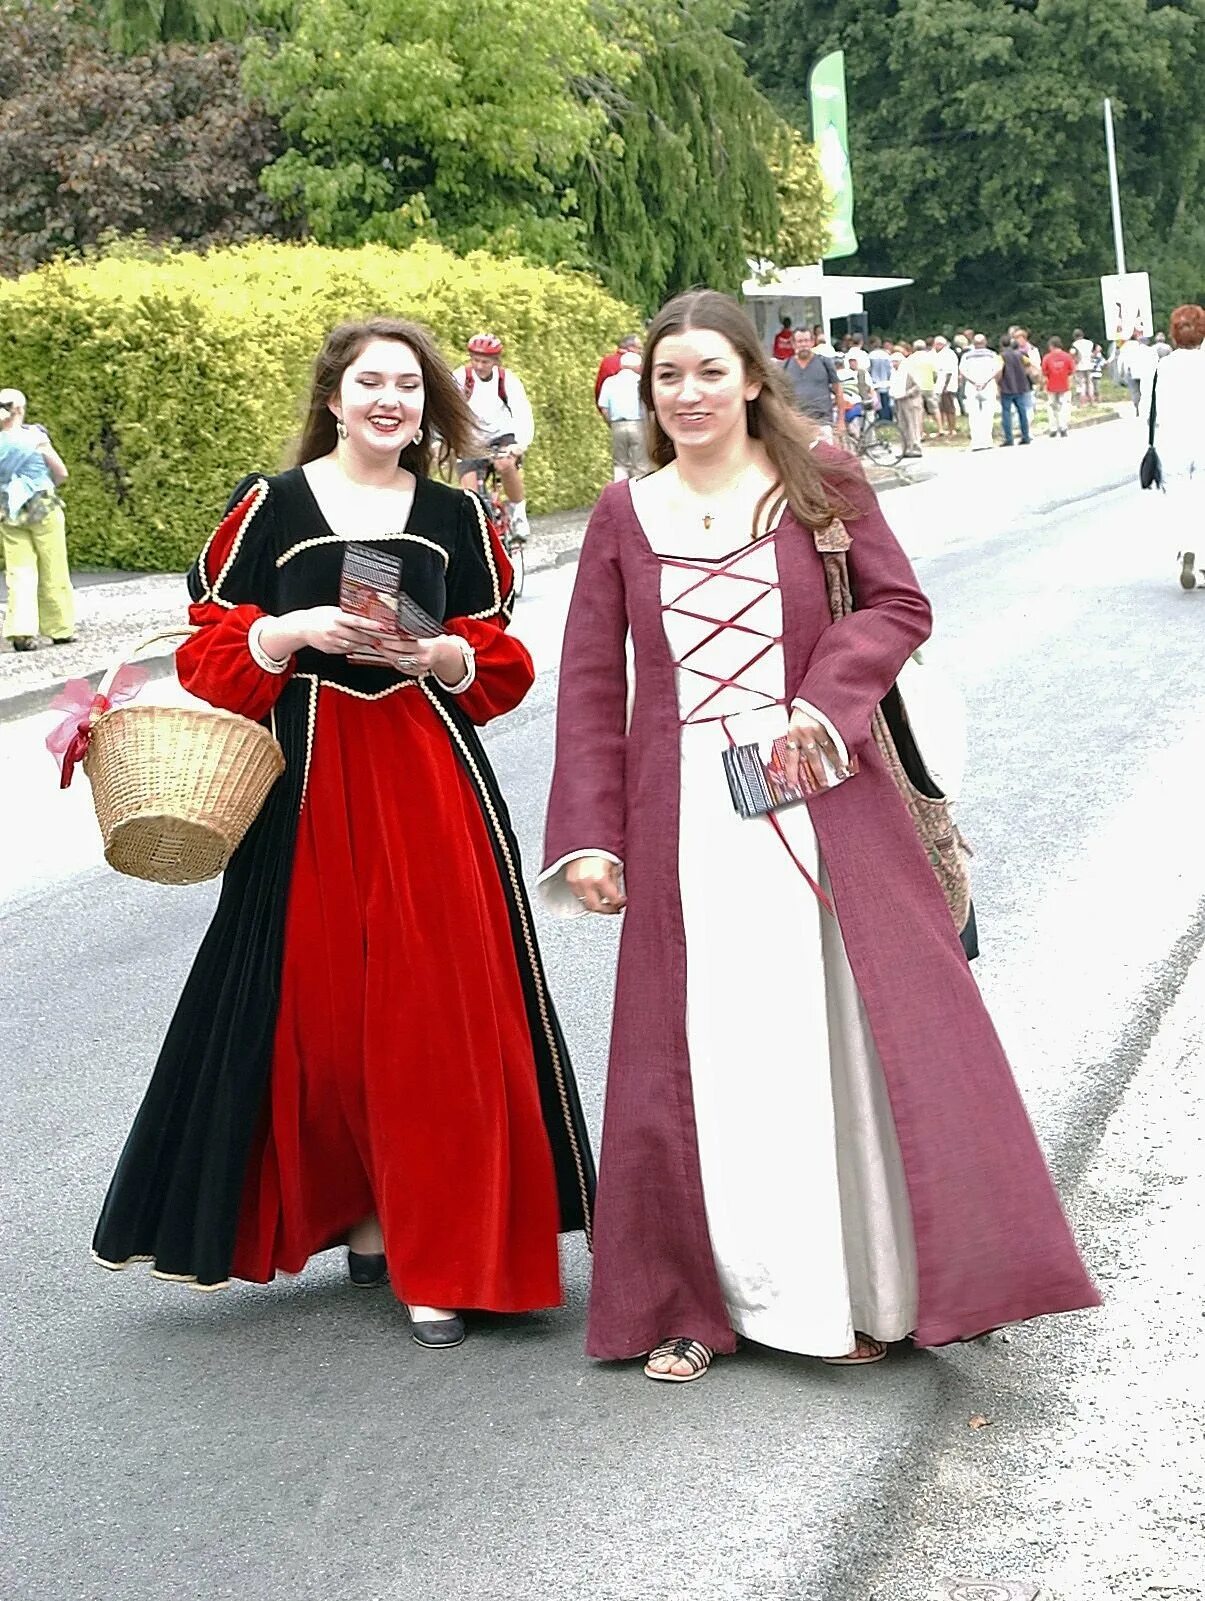 Франция народ нац костюм. Традиционная одежда Франции. Французский национальный костюм. Французский народный костюм.